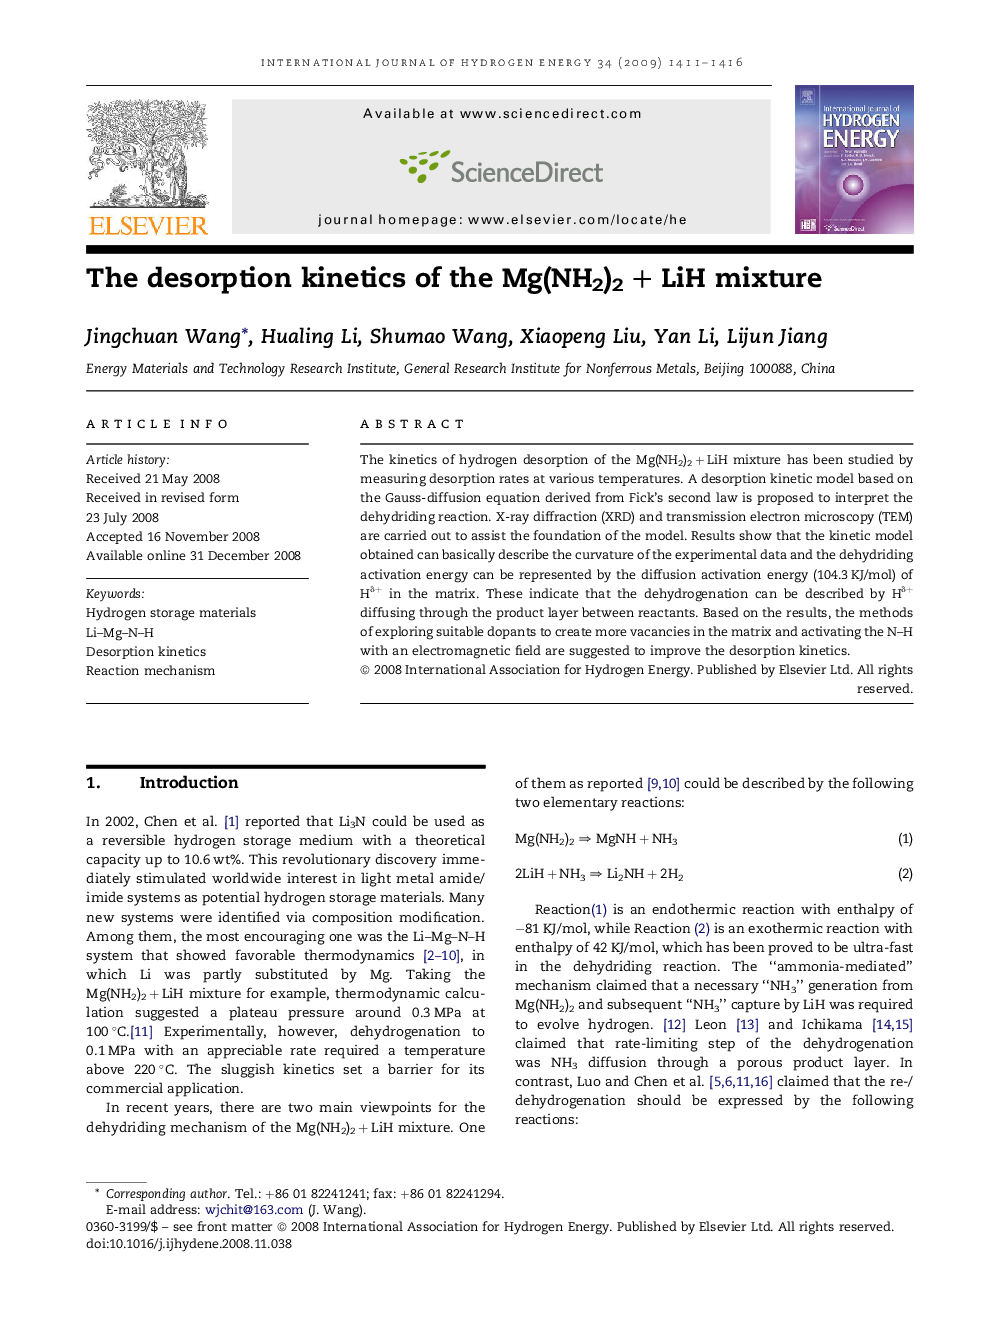 The desorption kinetics of the Mg(NH2)2 + LiH mixture